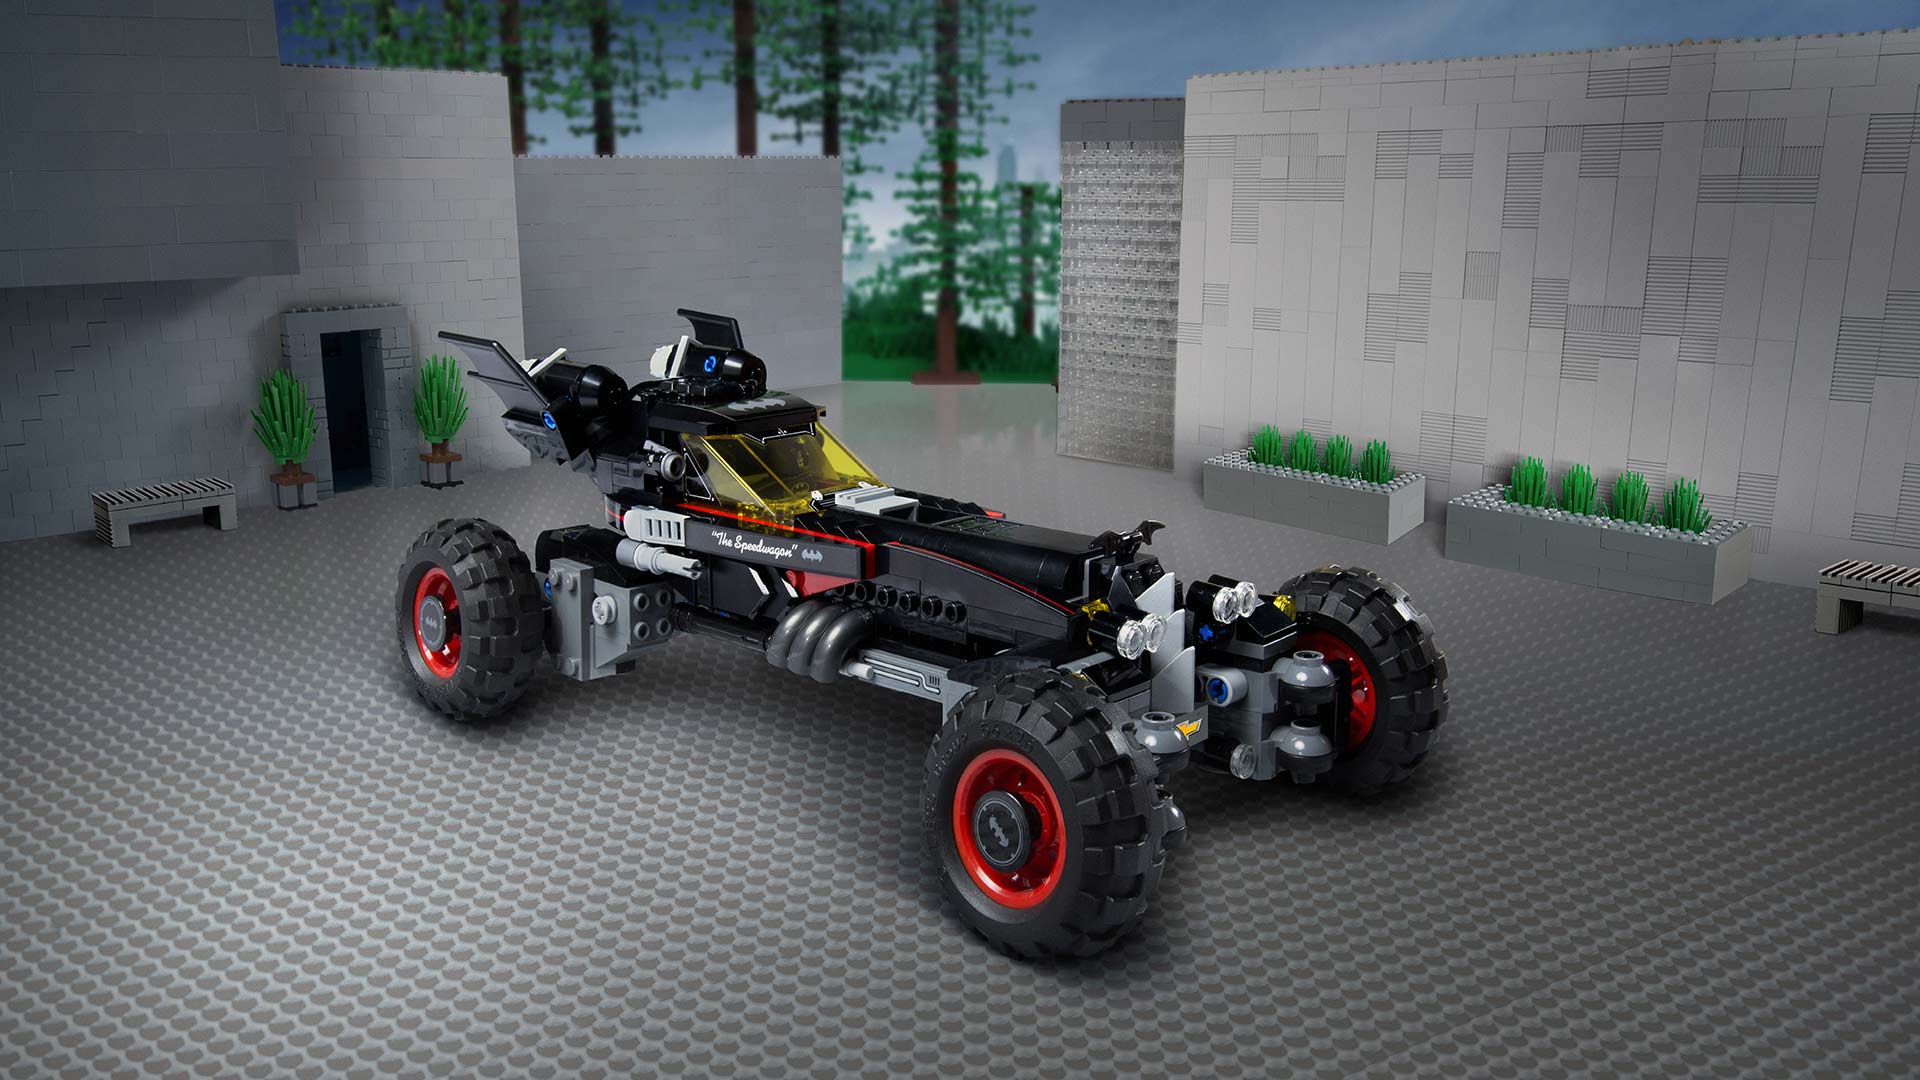 Chevrolet's life-size LEGO Batmobile 